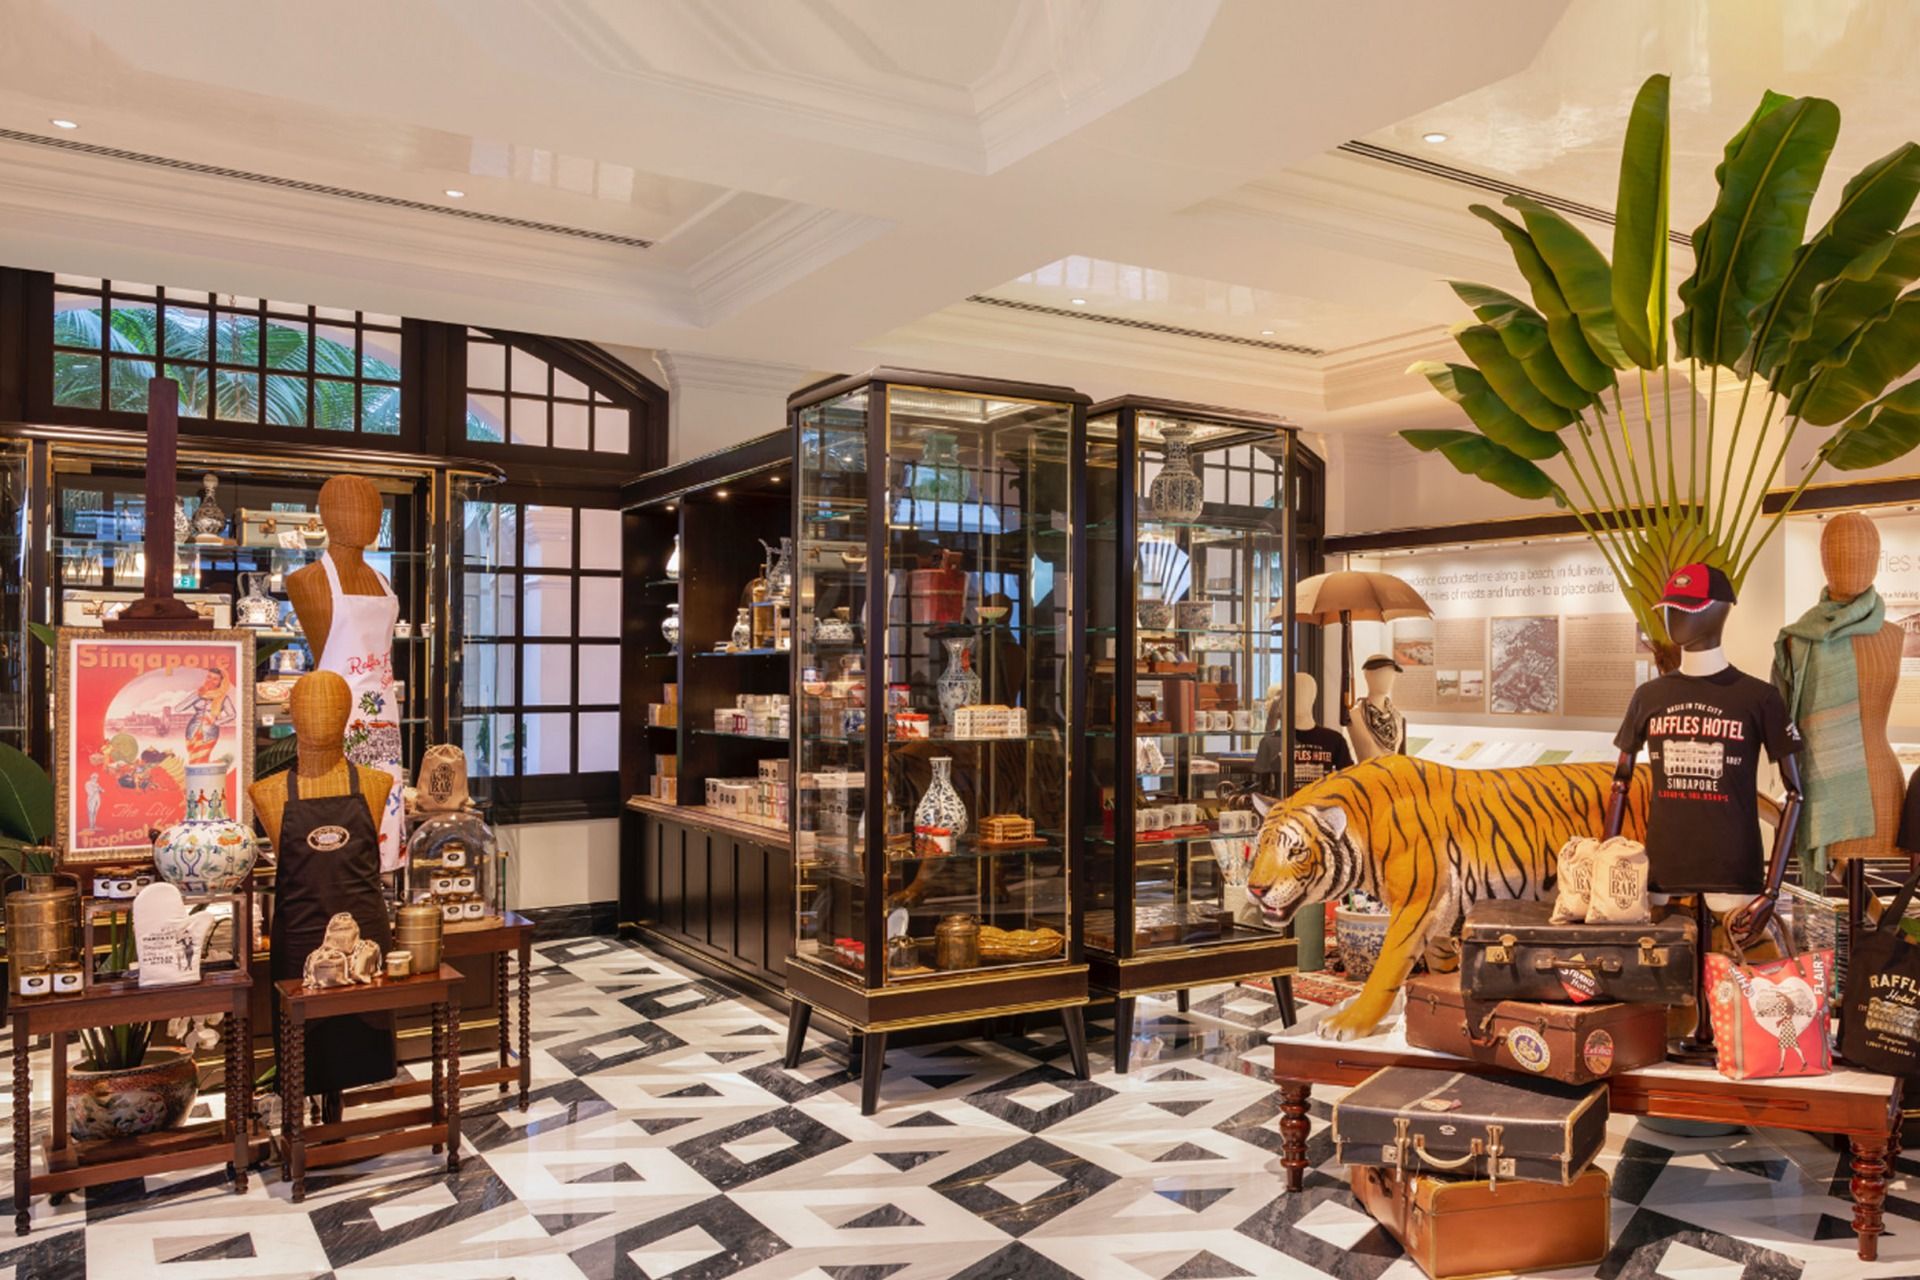 Proud Associate of Raffles Hotel - Raffles Boutique l The Past Perfect Collection l Singapore